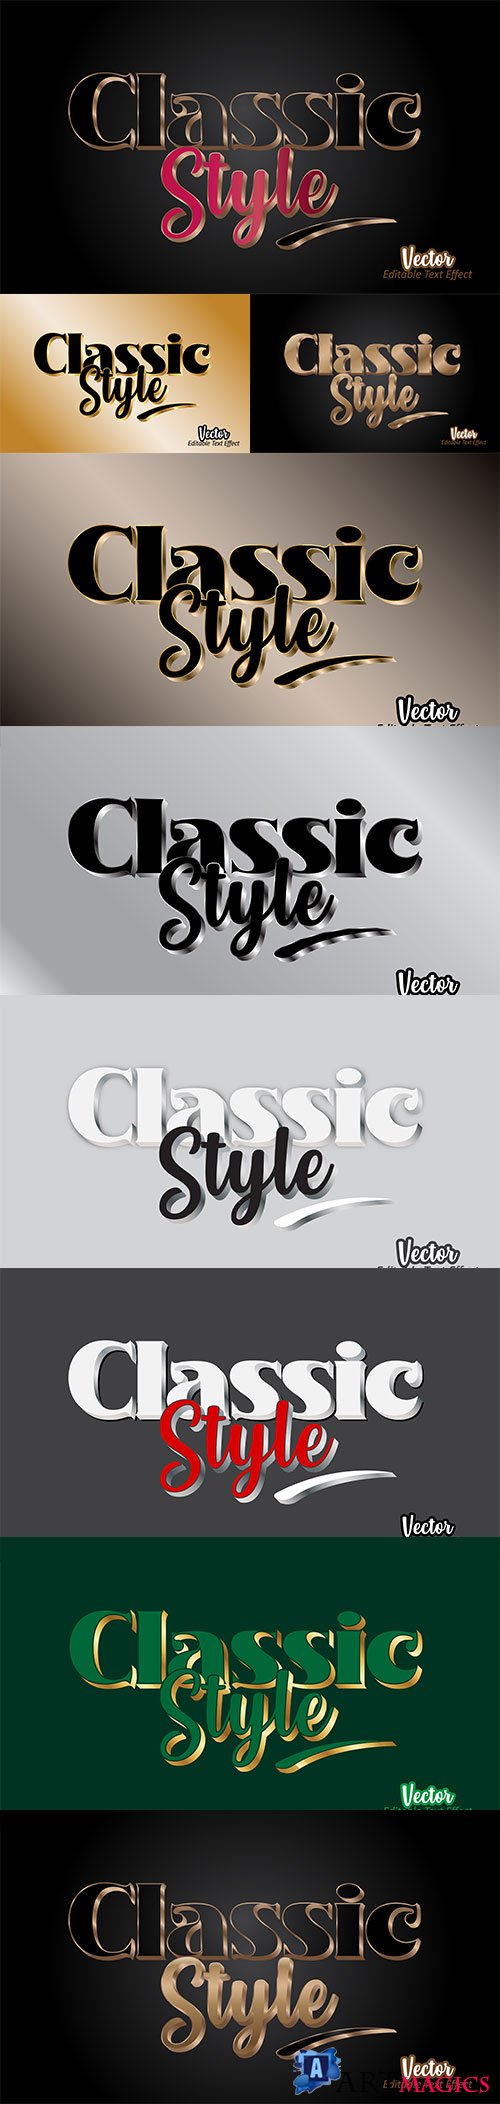 Editable classic style 3d text effect template premium vector